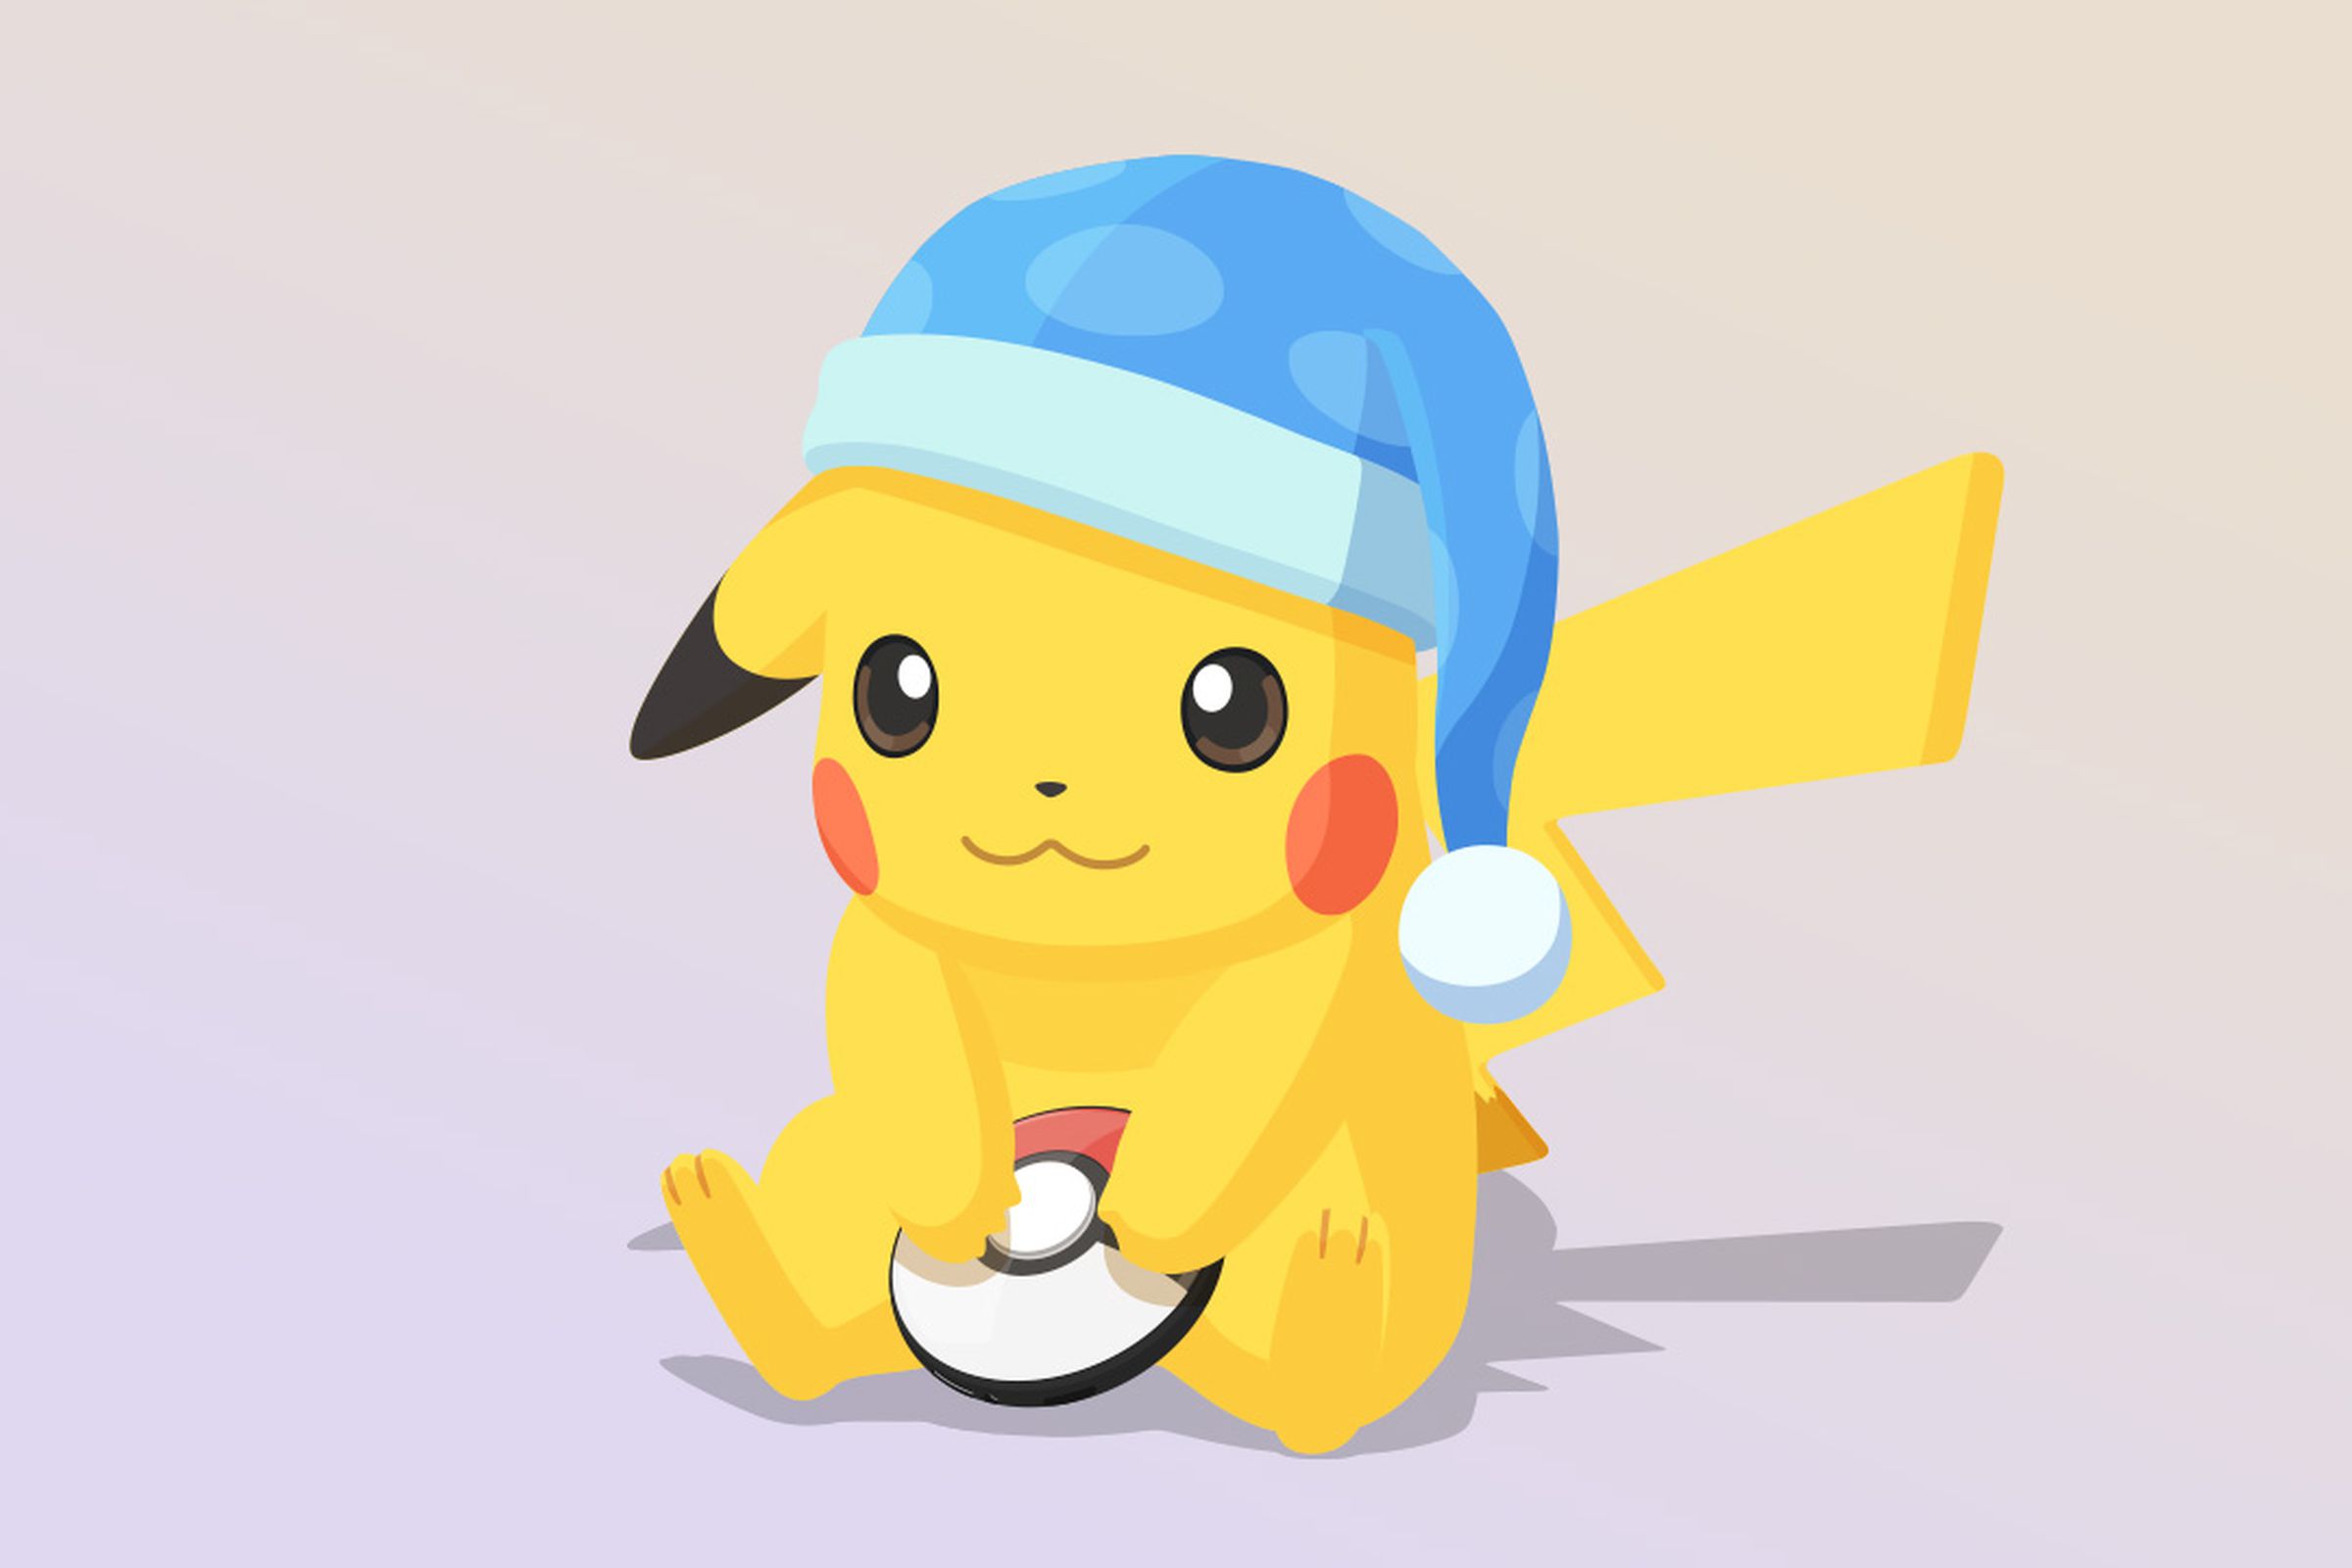 Key art from Pokémon Sleep featuring a Pikachu in a blue sleeping cap holding a small Pokémon Go Plus+ device.